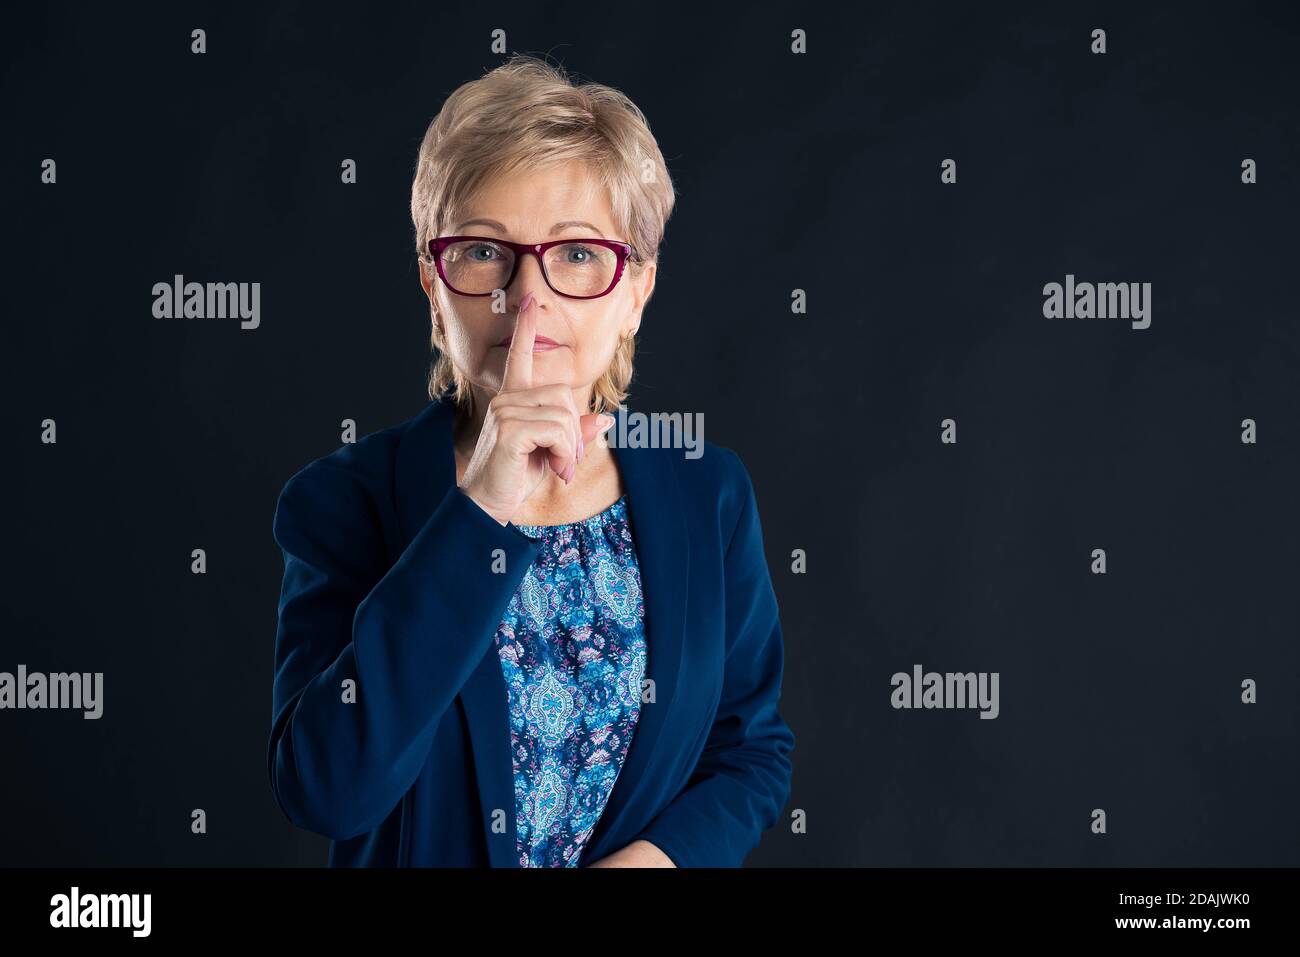 Senior secretary making silence gesture on a dark background Stock Photo